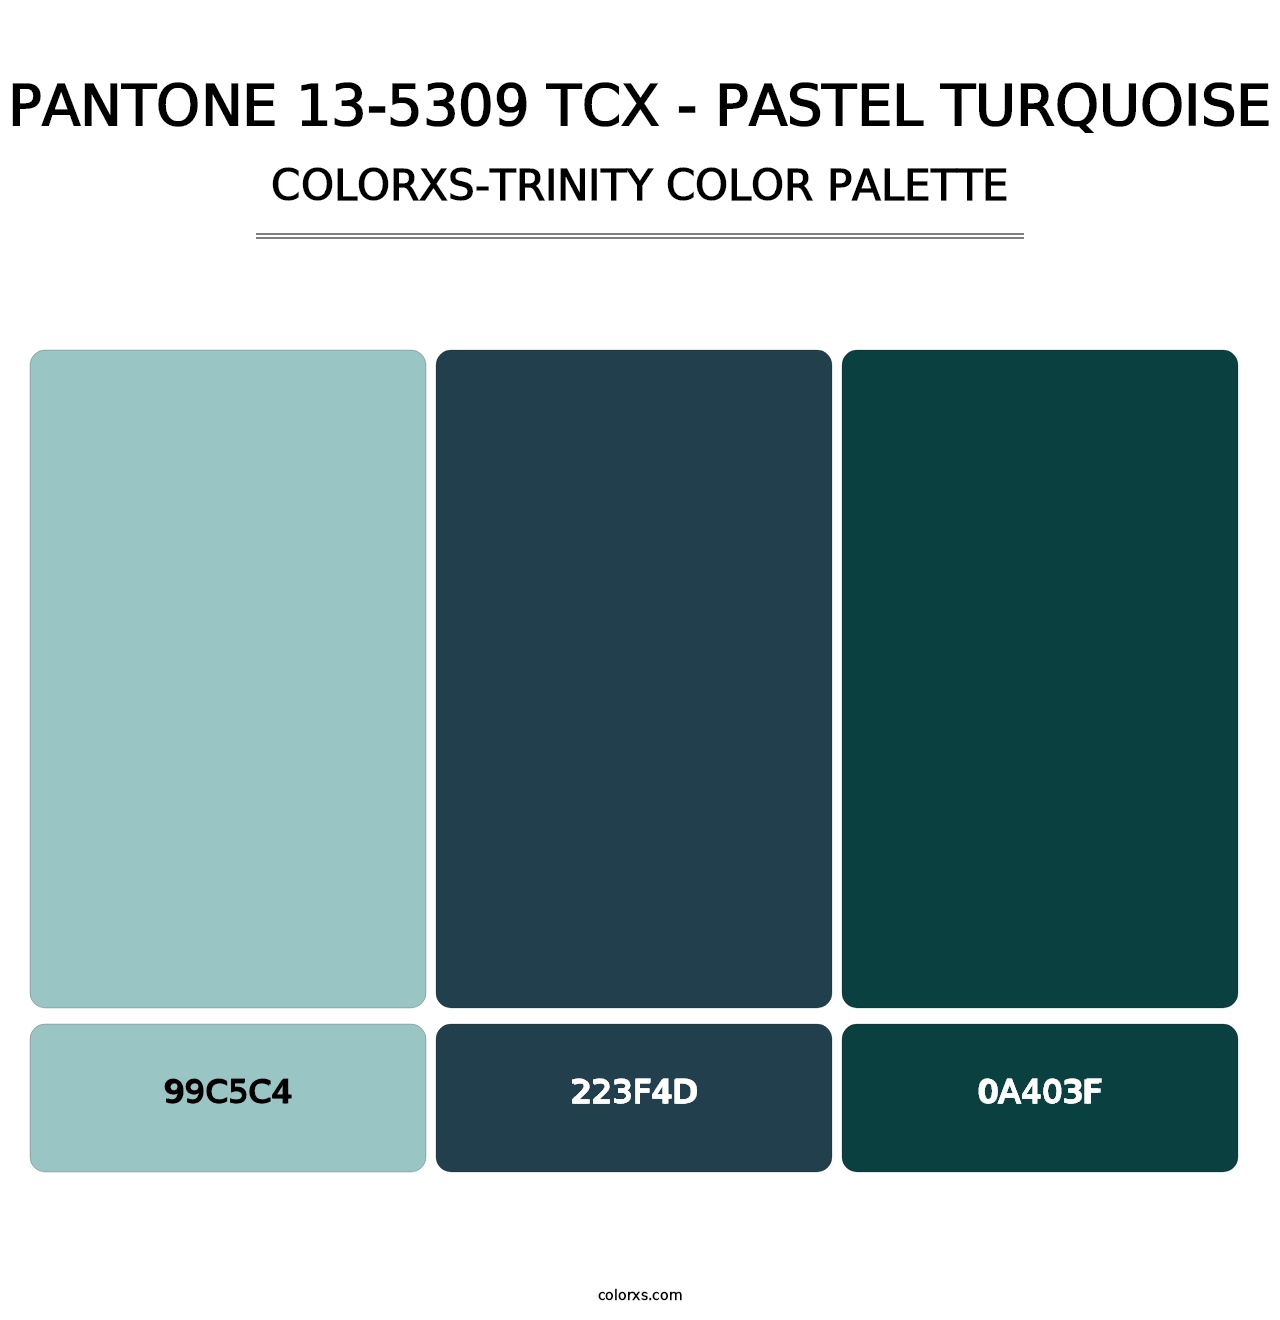 PANTONE 13-5309 TCX - Pastel Turquoise - Colorxs Trinity Palette